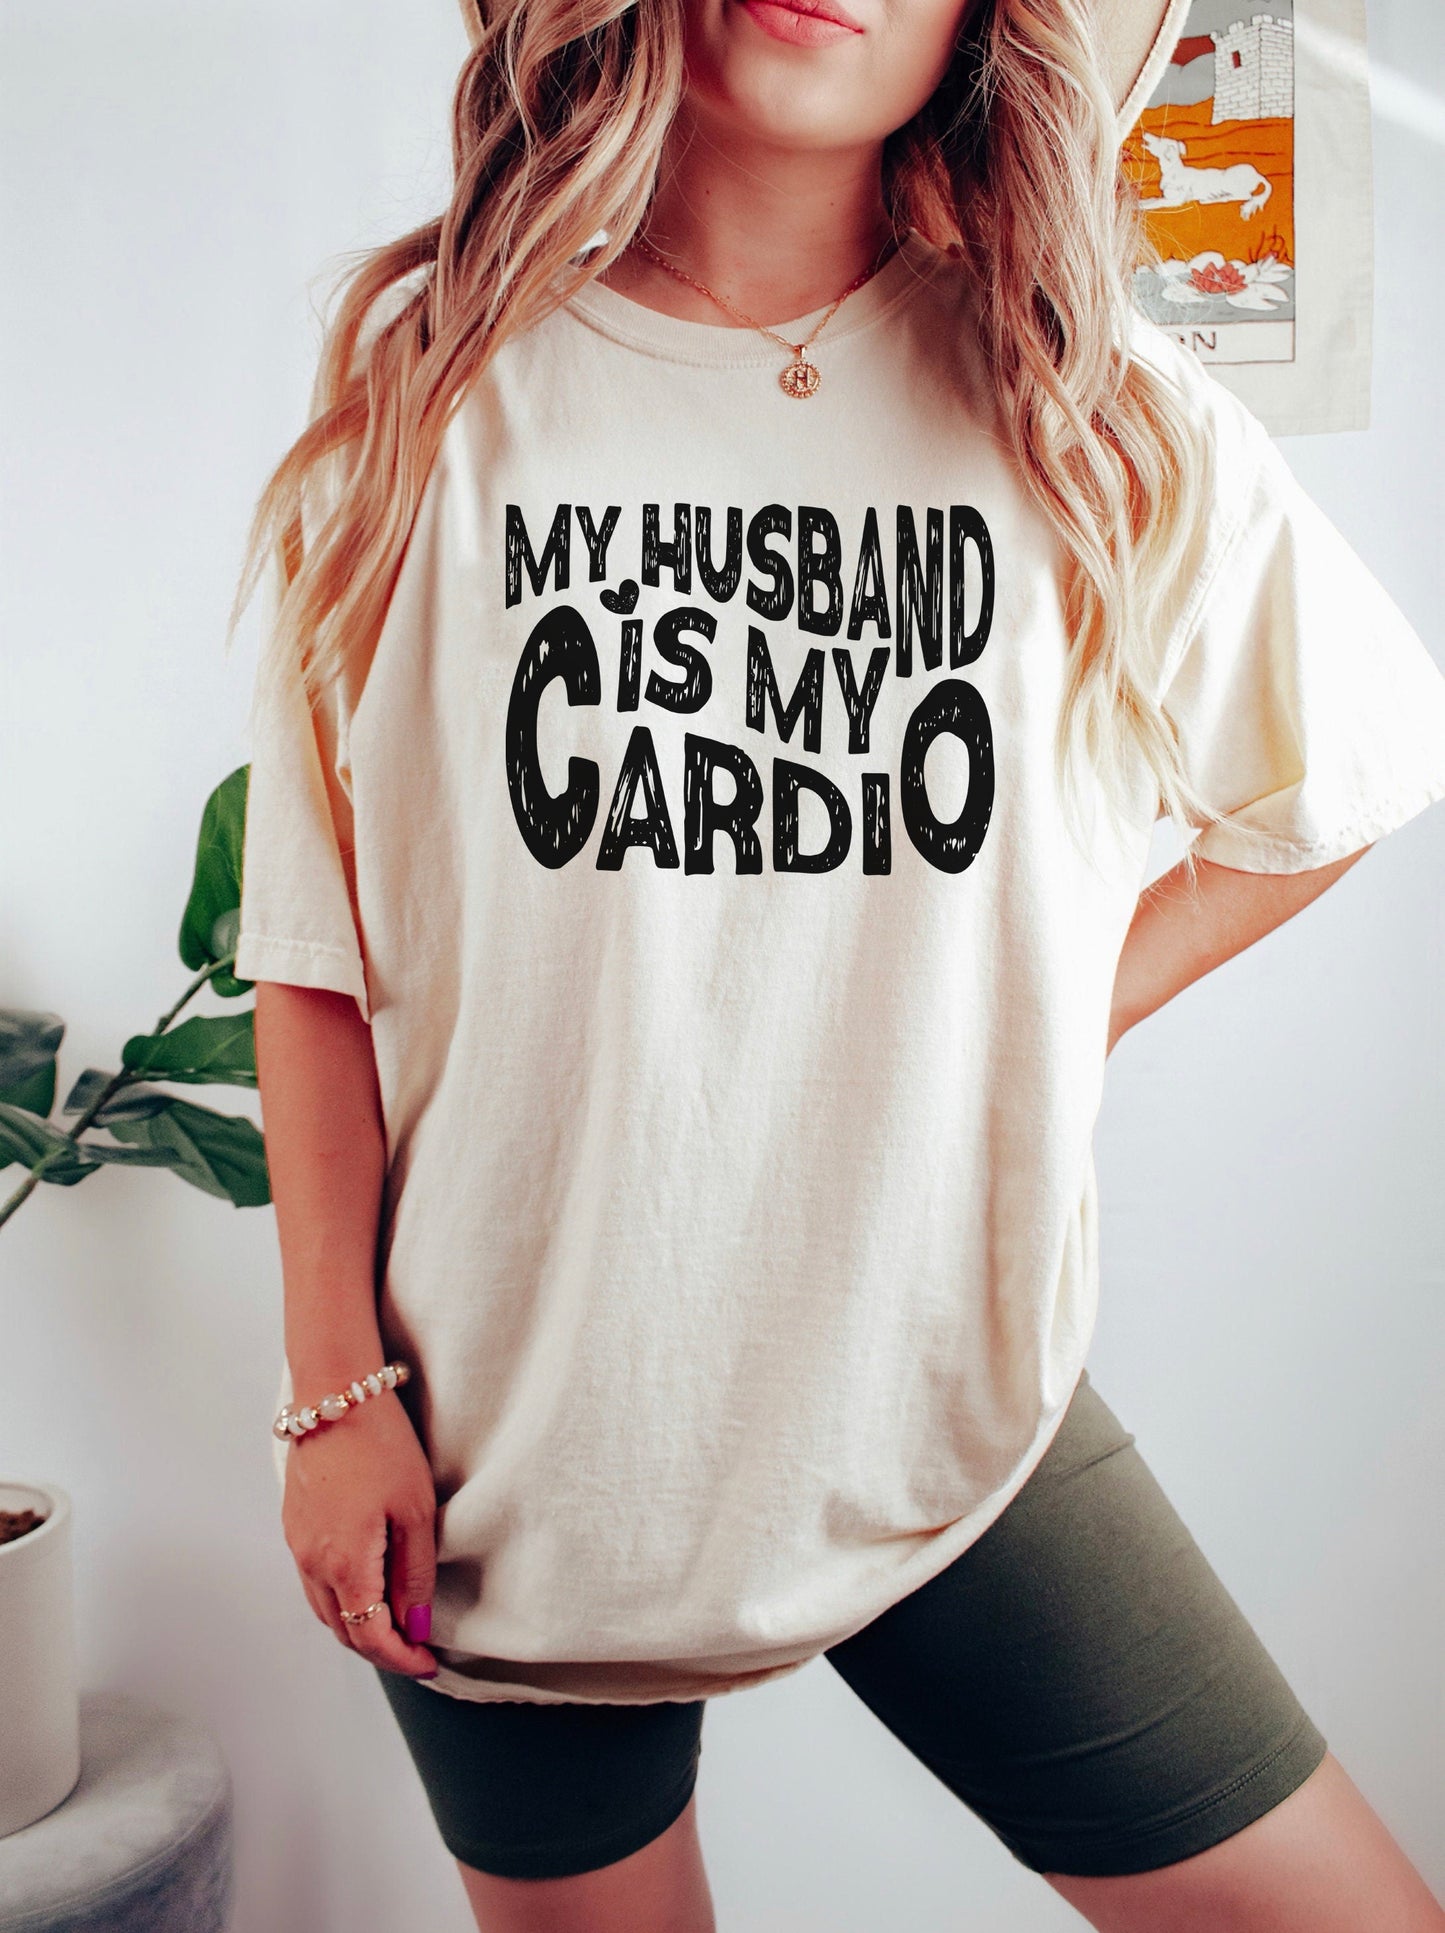 My Husband Is My Cardio Shirt